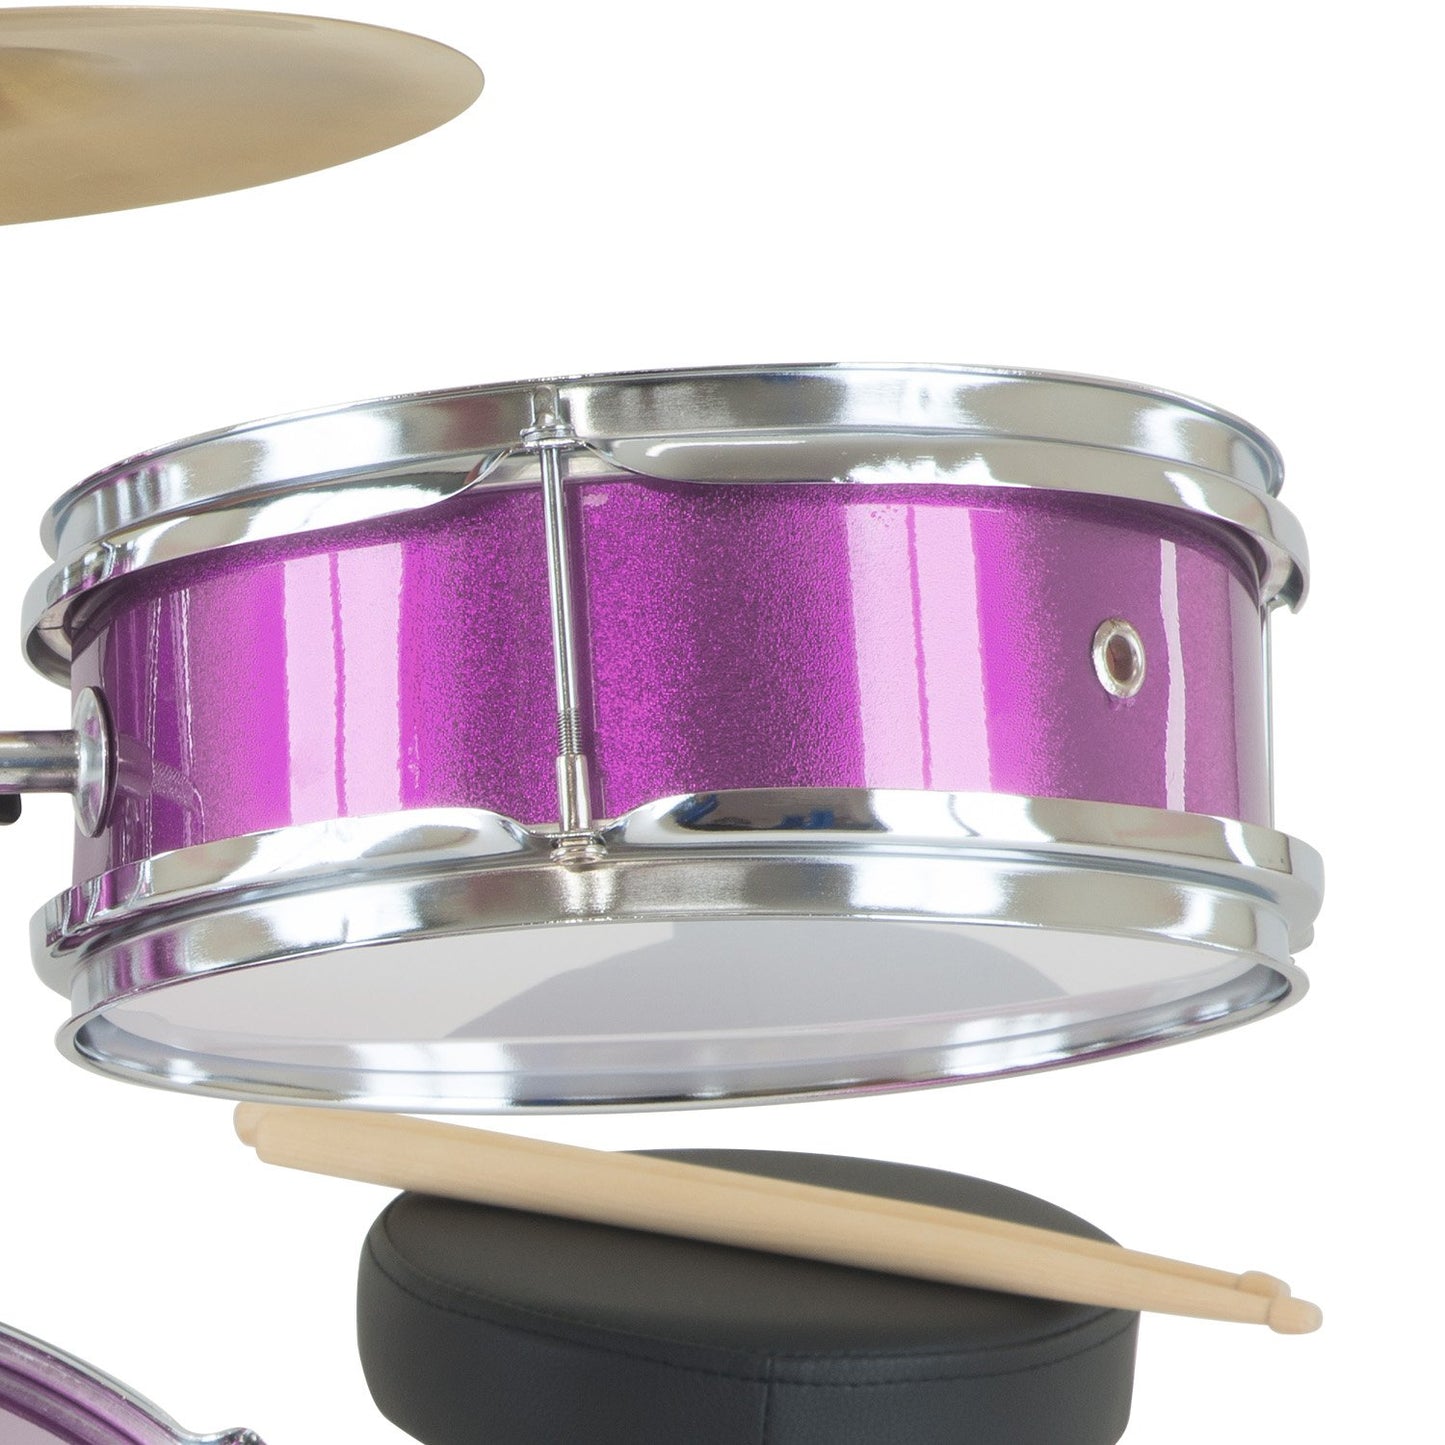 Karrera Childrens 4pc Drum Kit - Purple